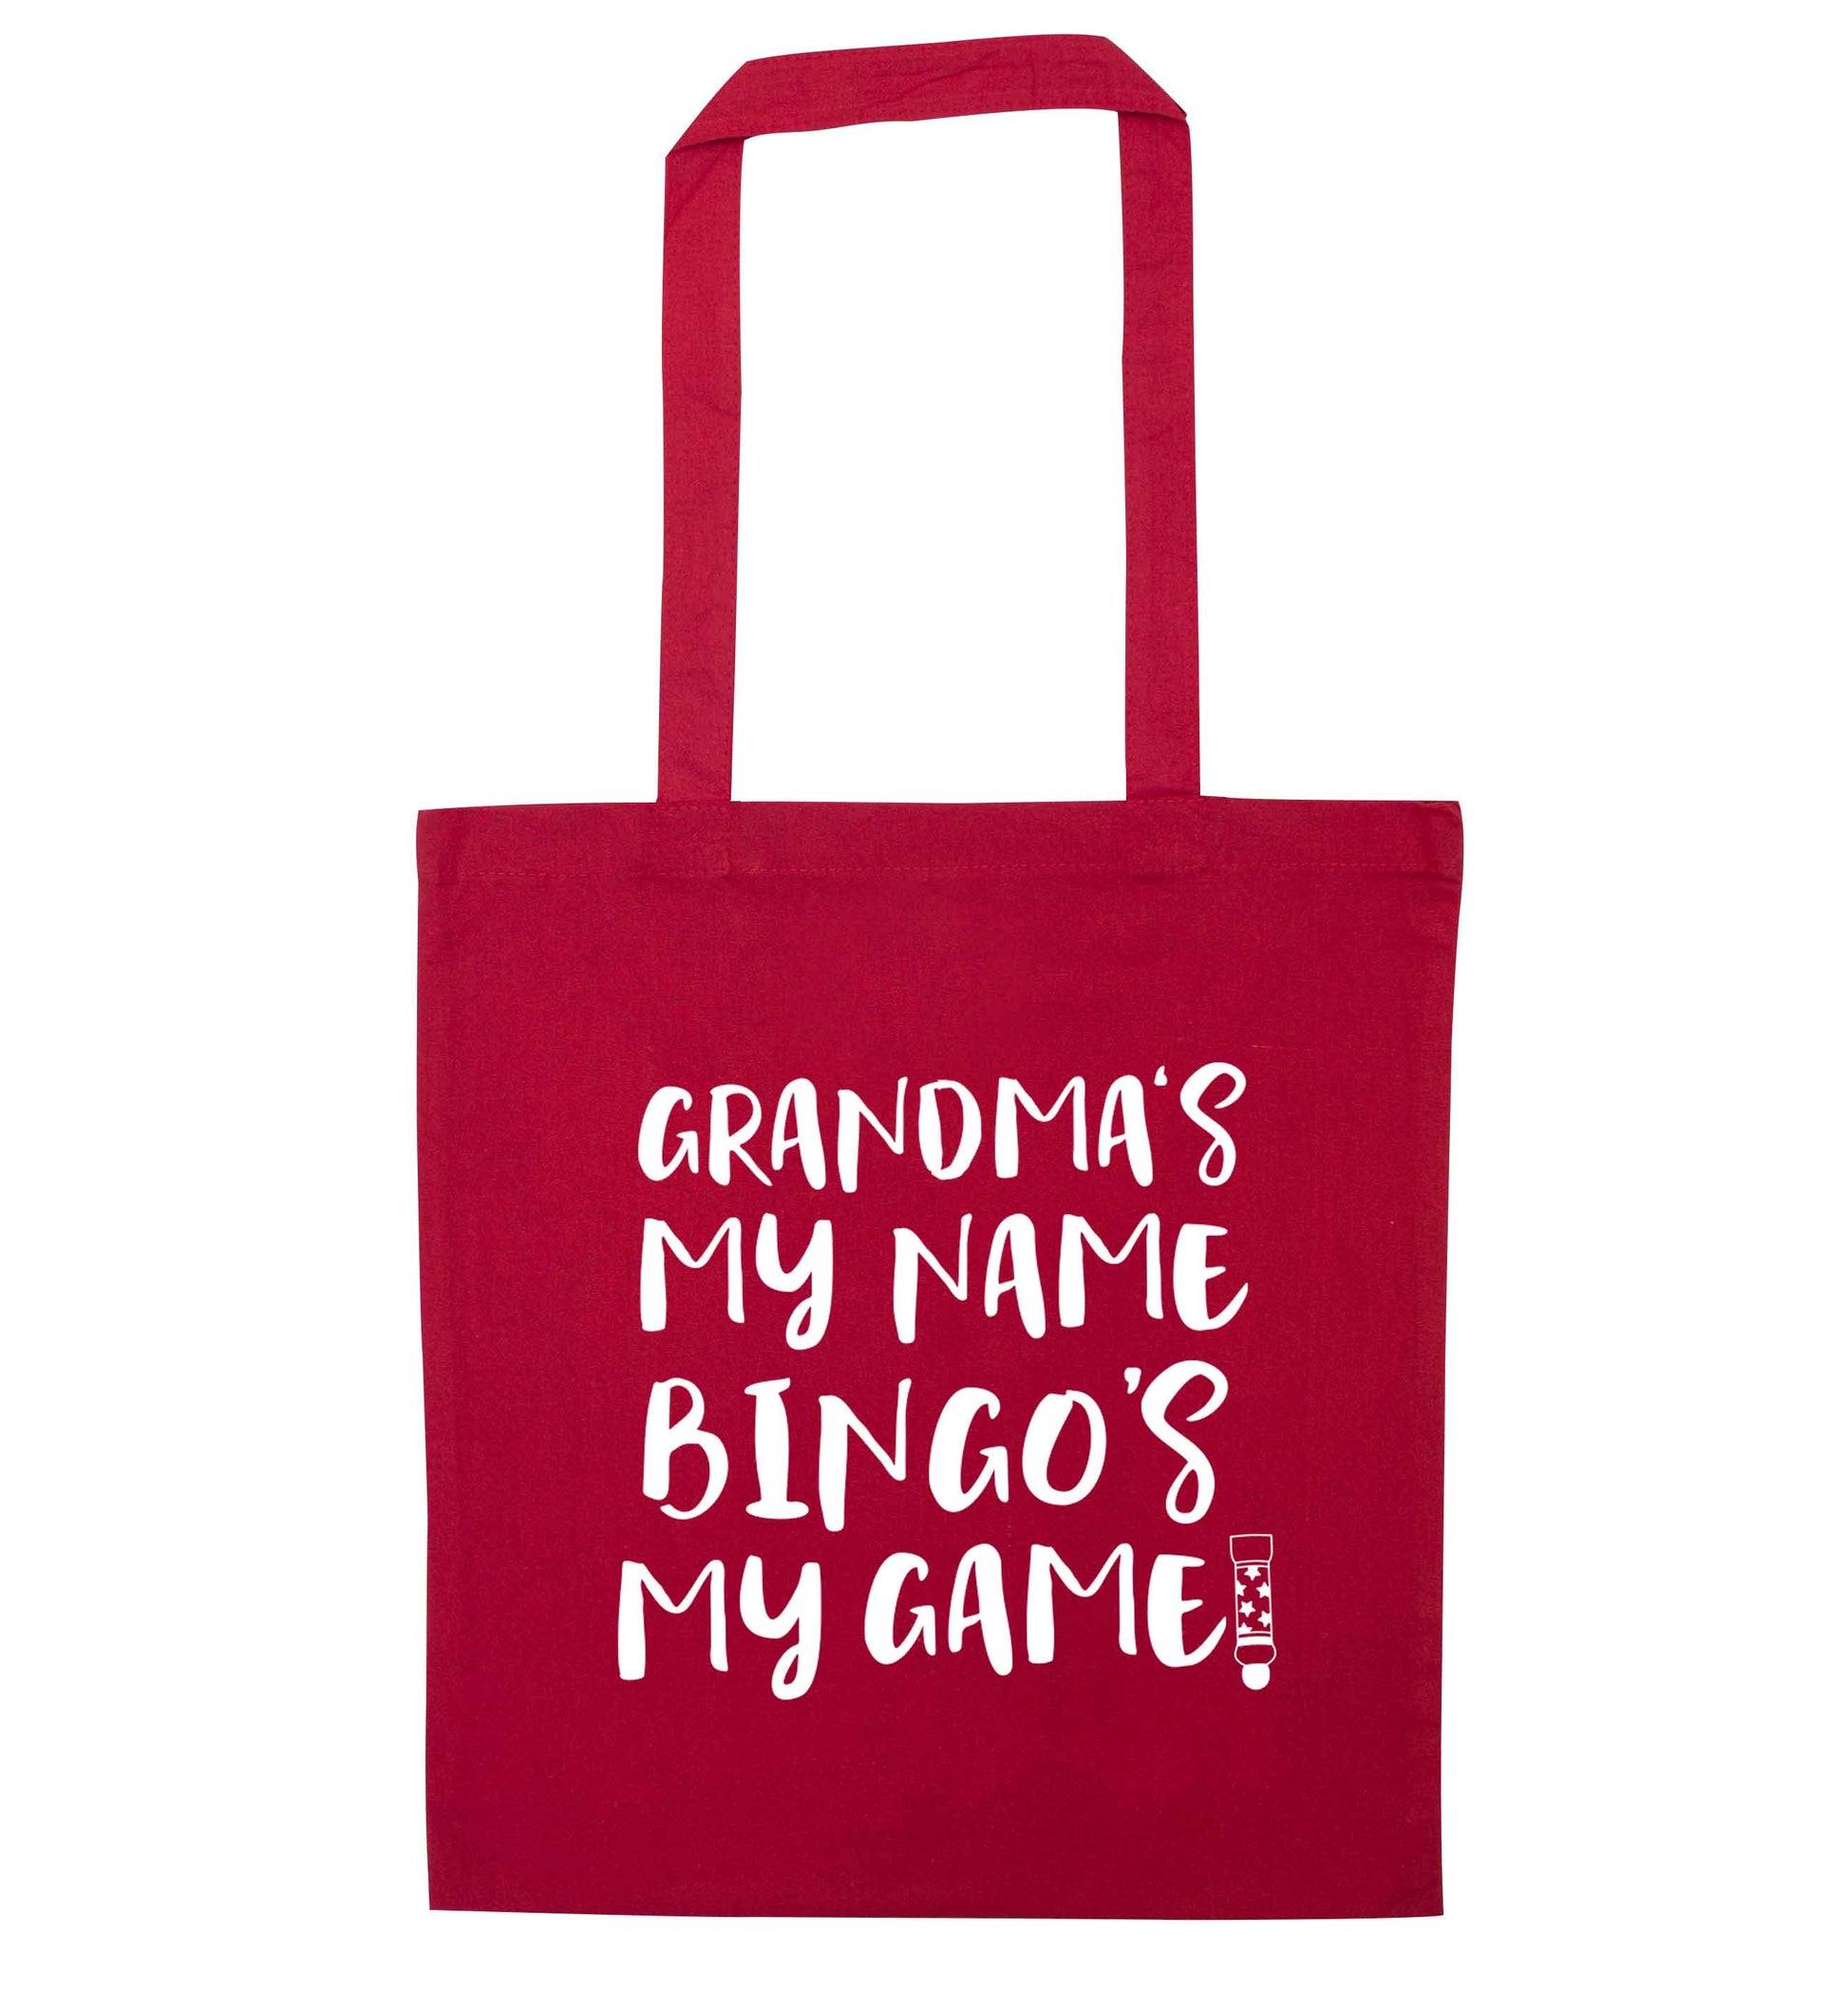 Grandma's my name bingo's my game! red tote bag